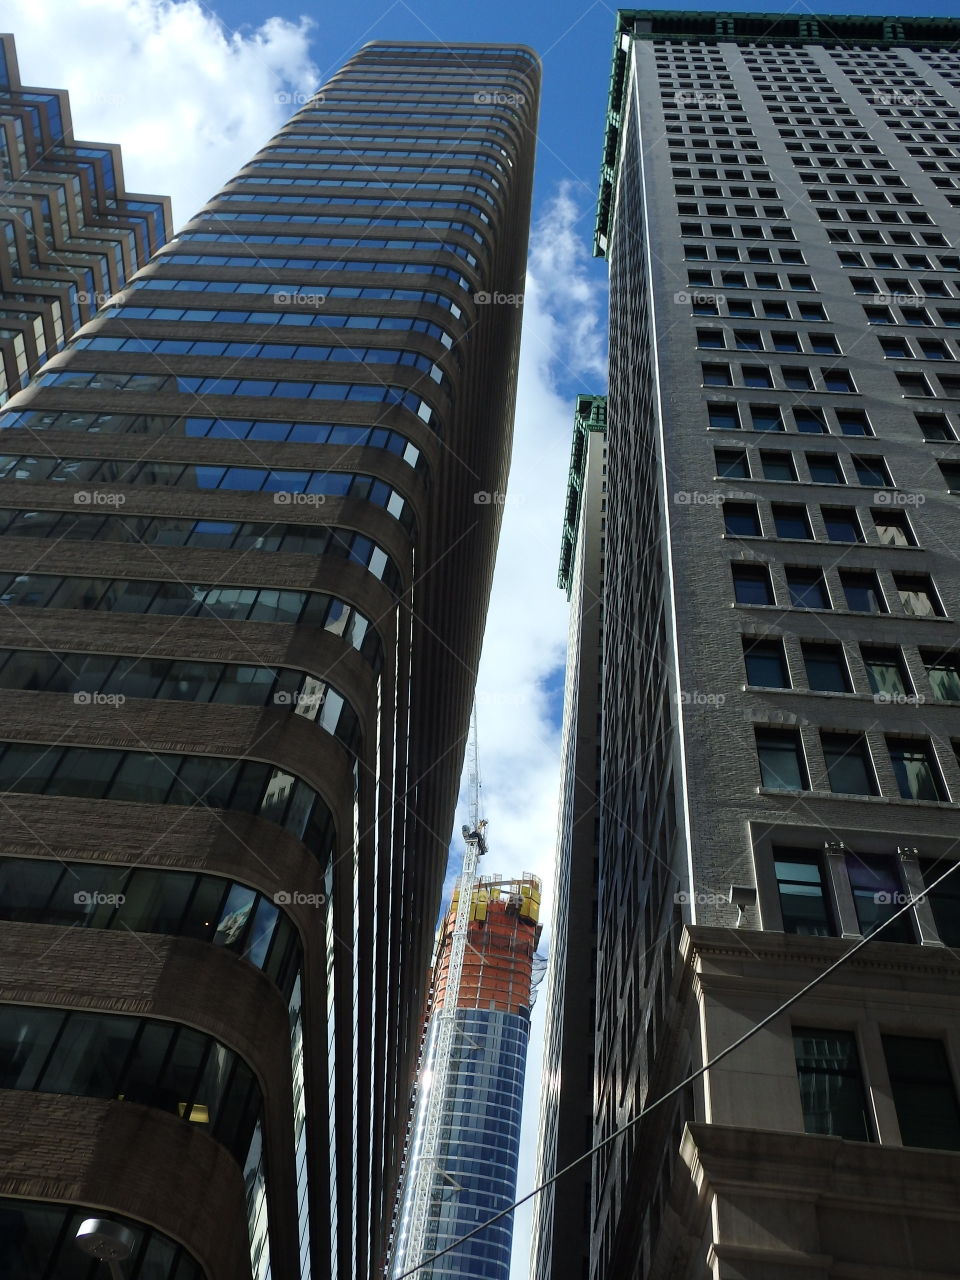 Manhattan skyscrapers